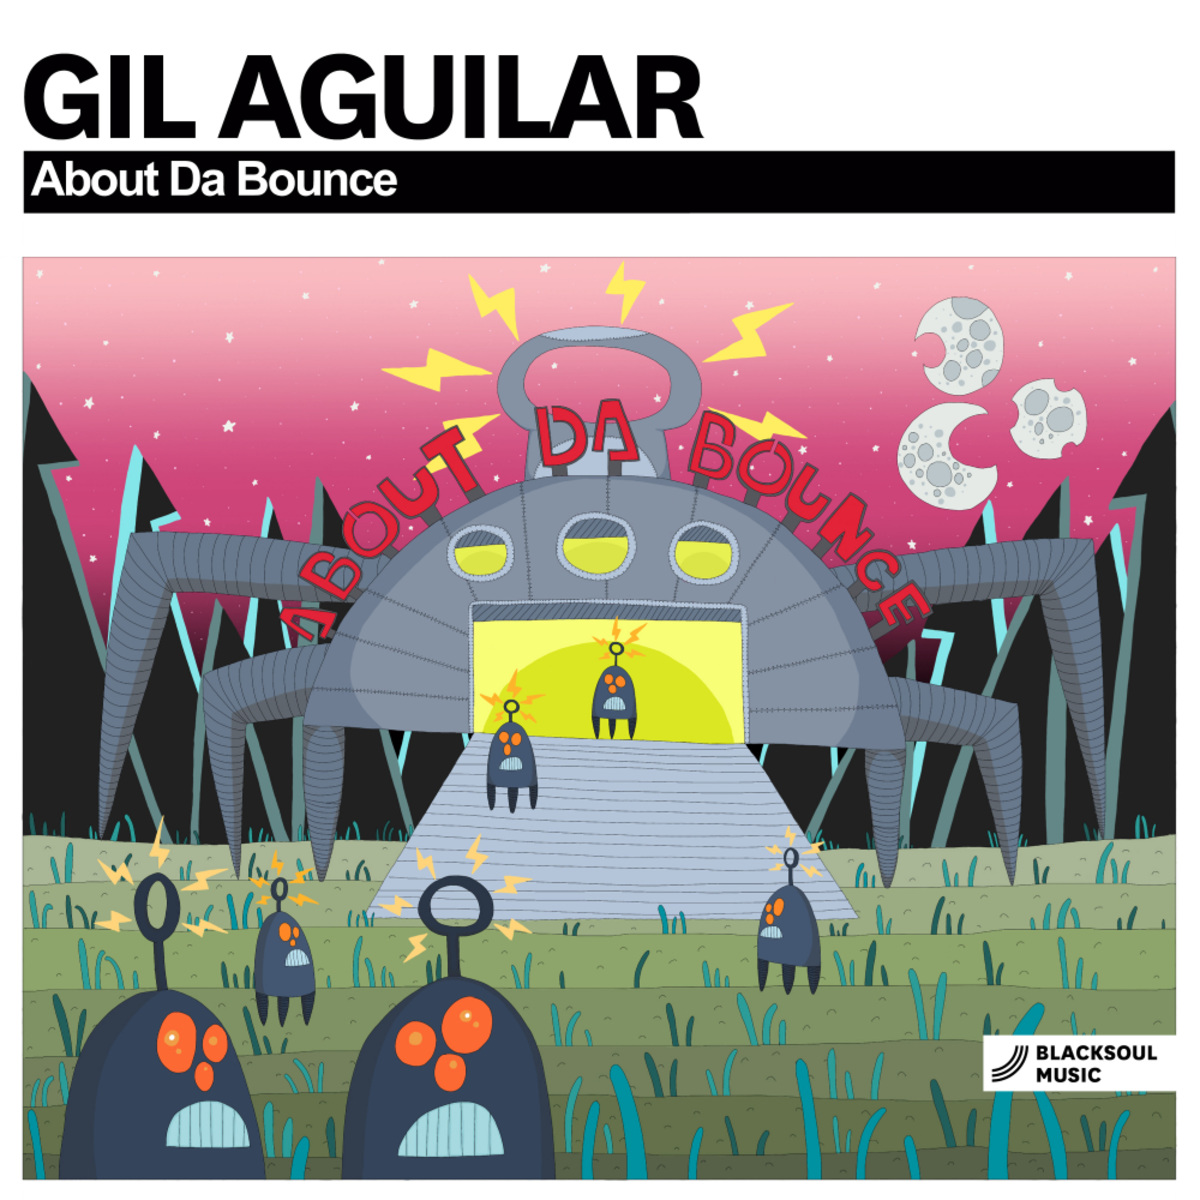 Gil Aguilar - About Da Bounce / Blacksoul Music